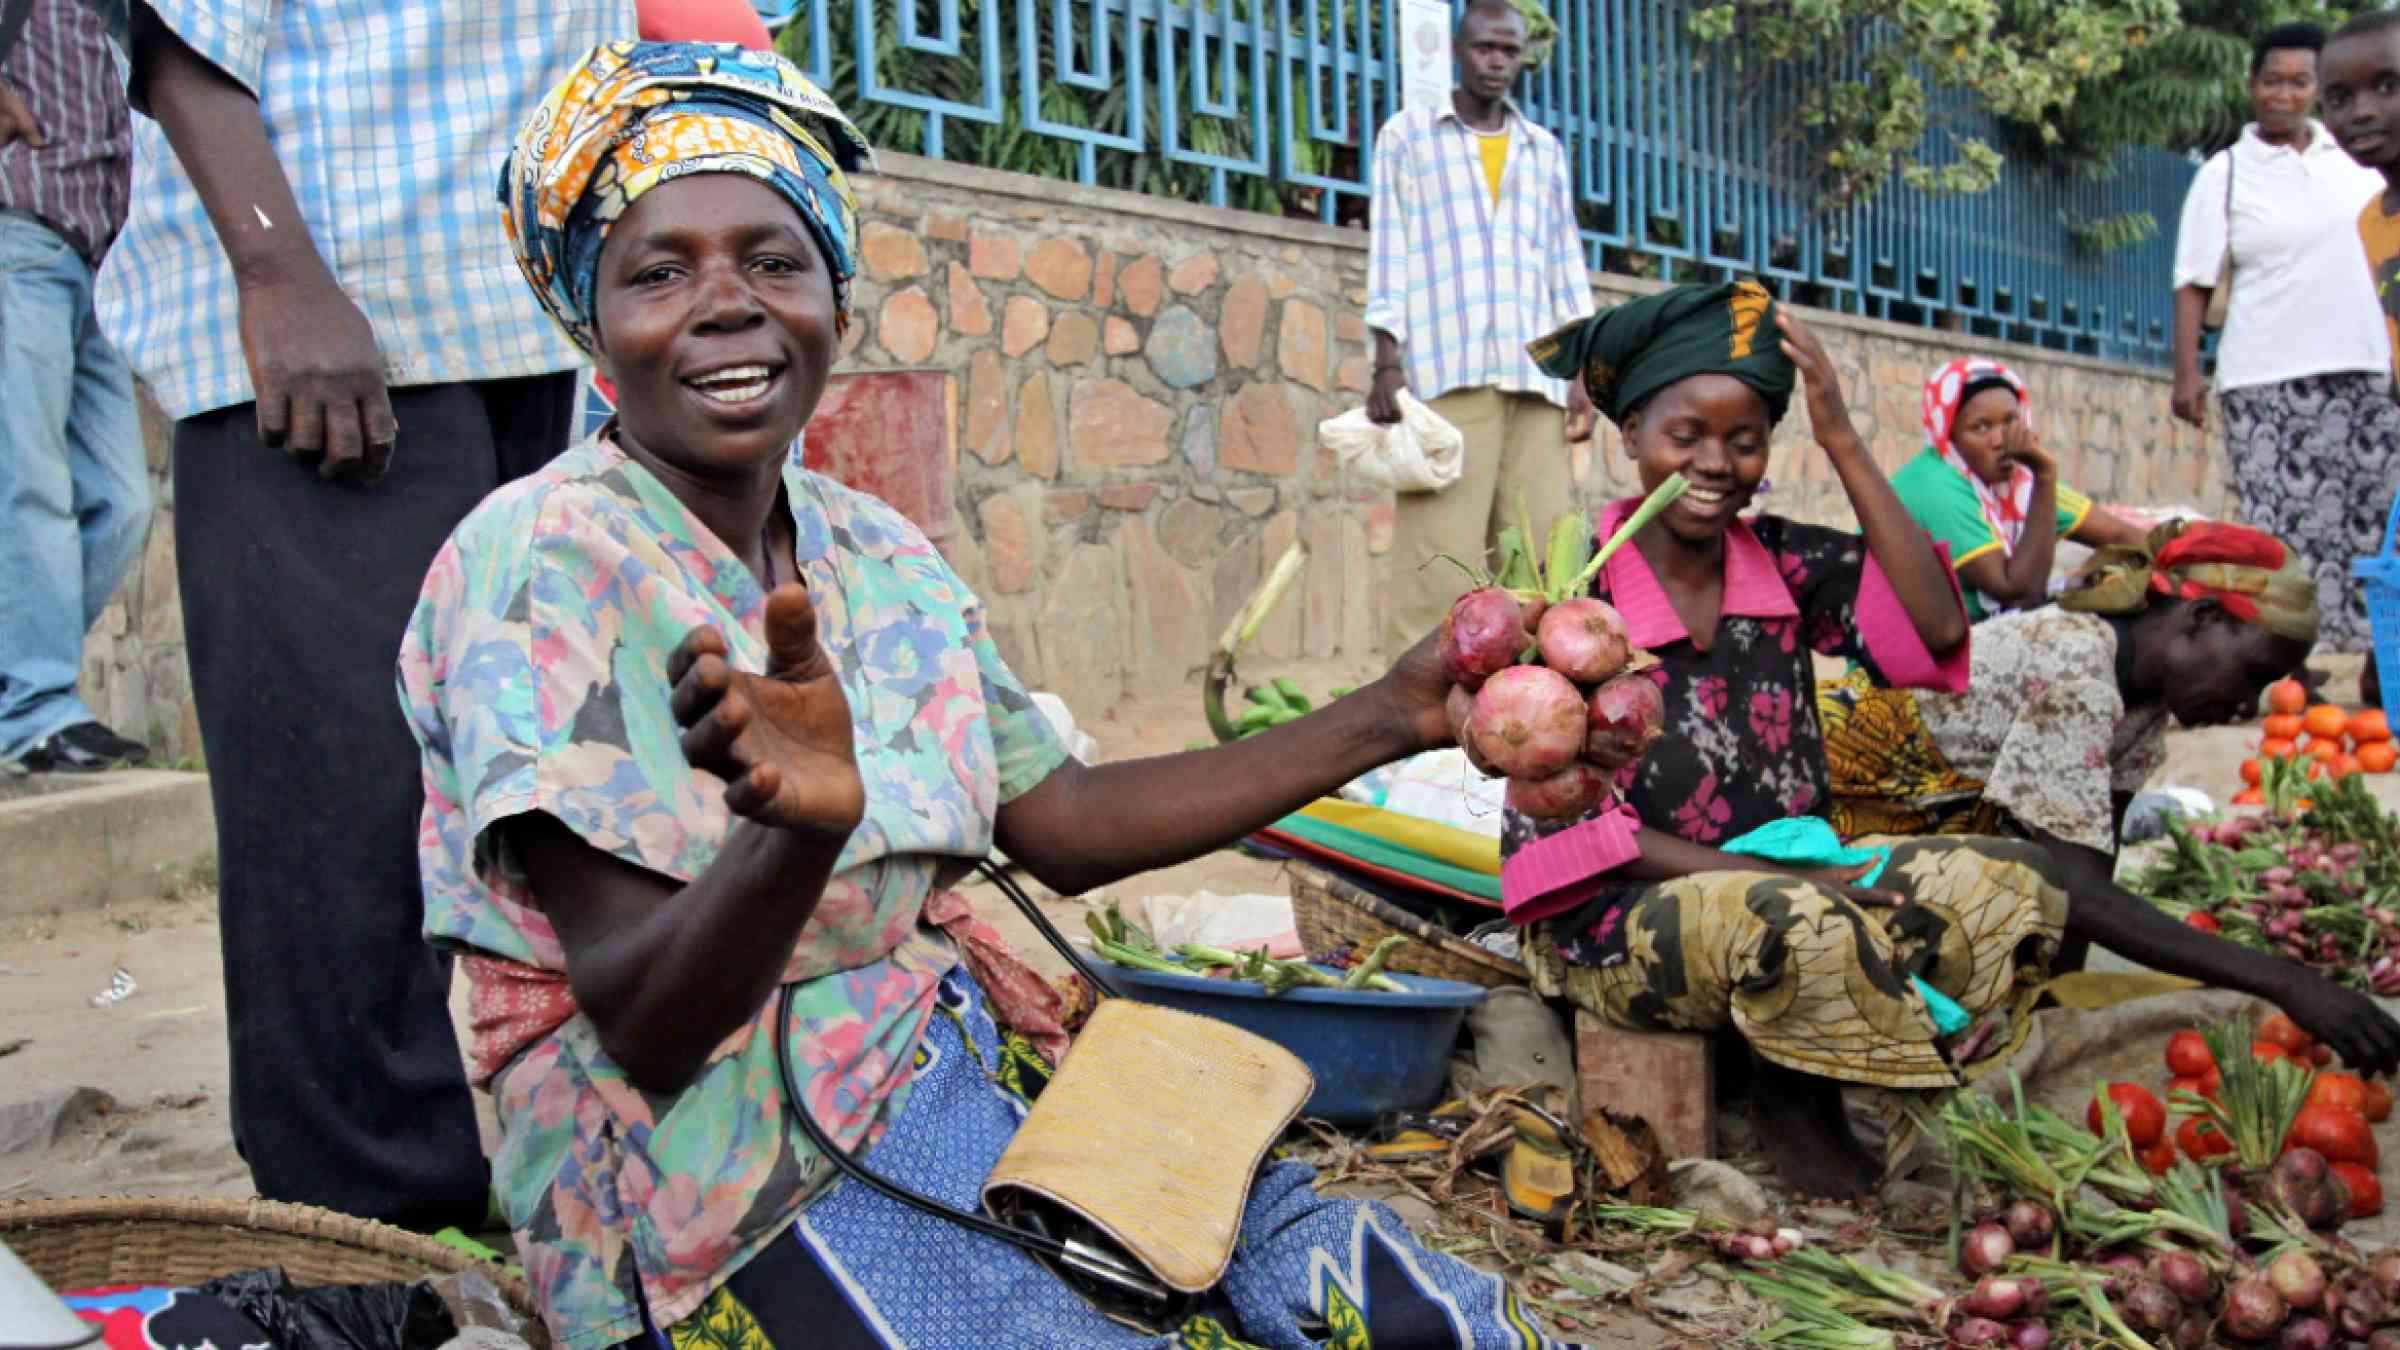 Women and men selling goods in a market in Burundi